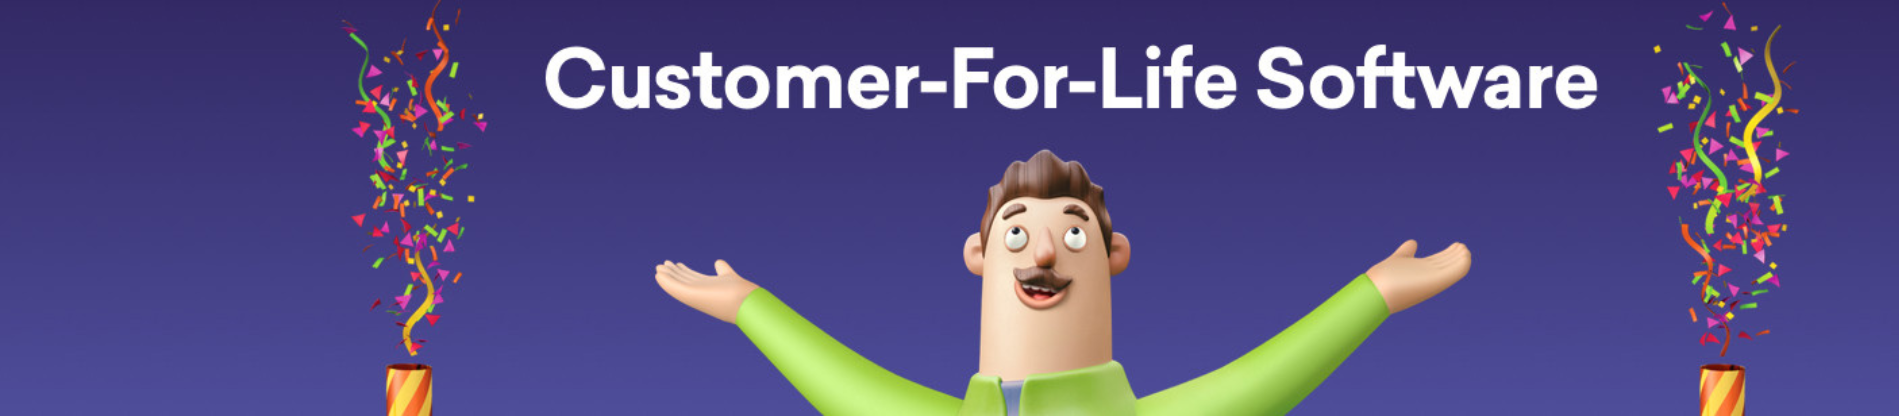 customer-for-life-software-banner